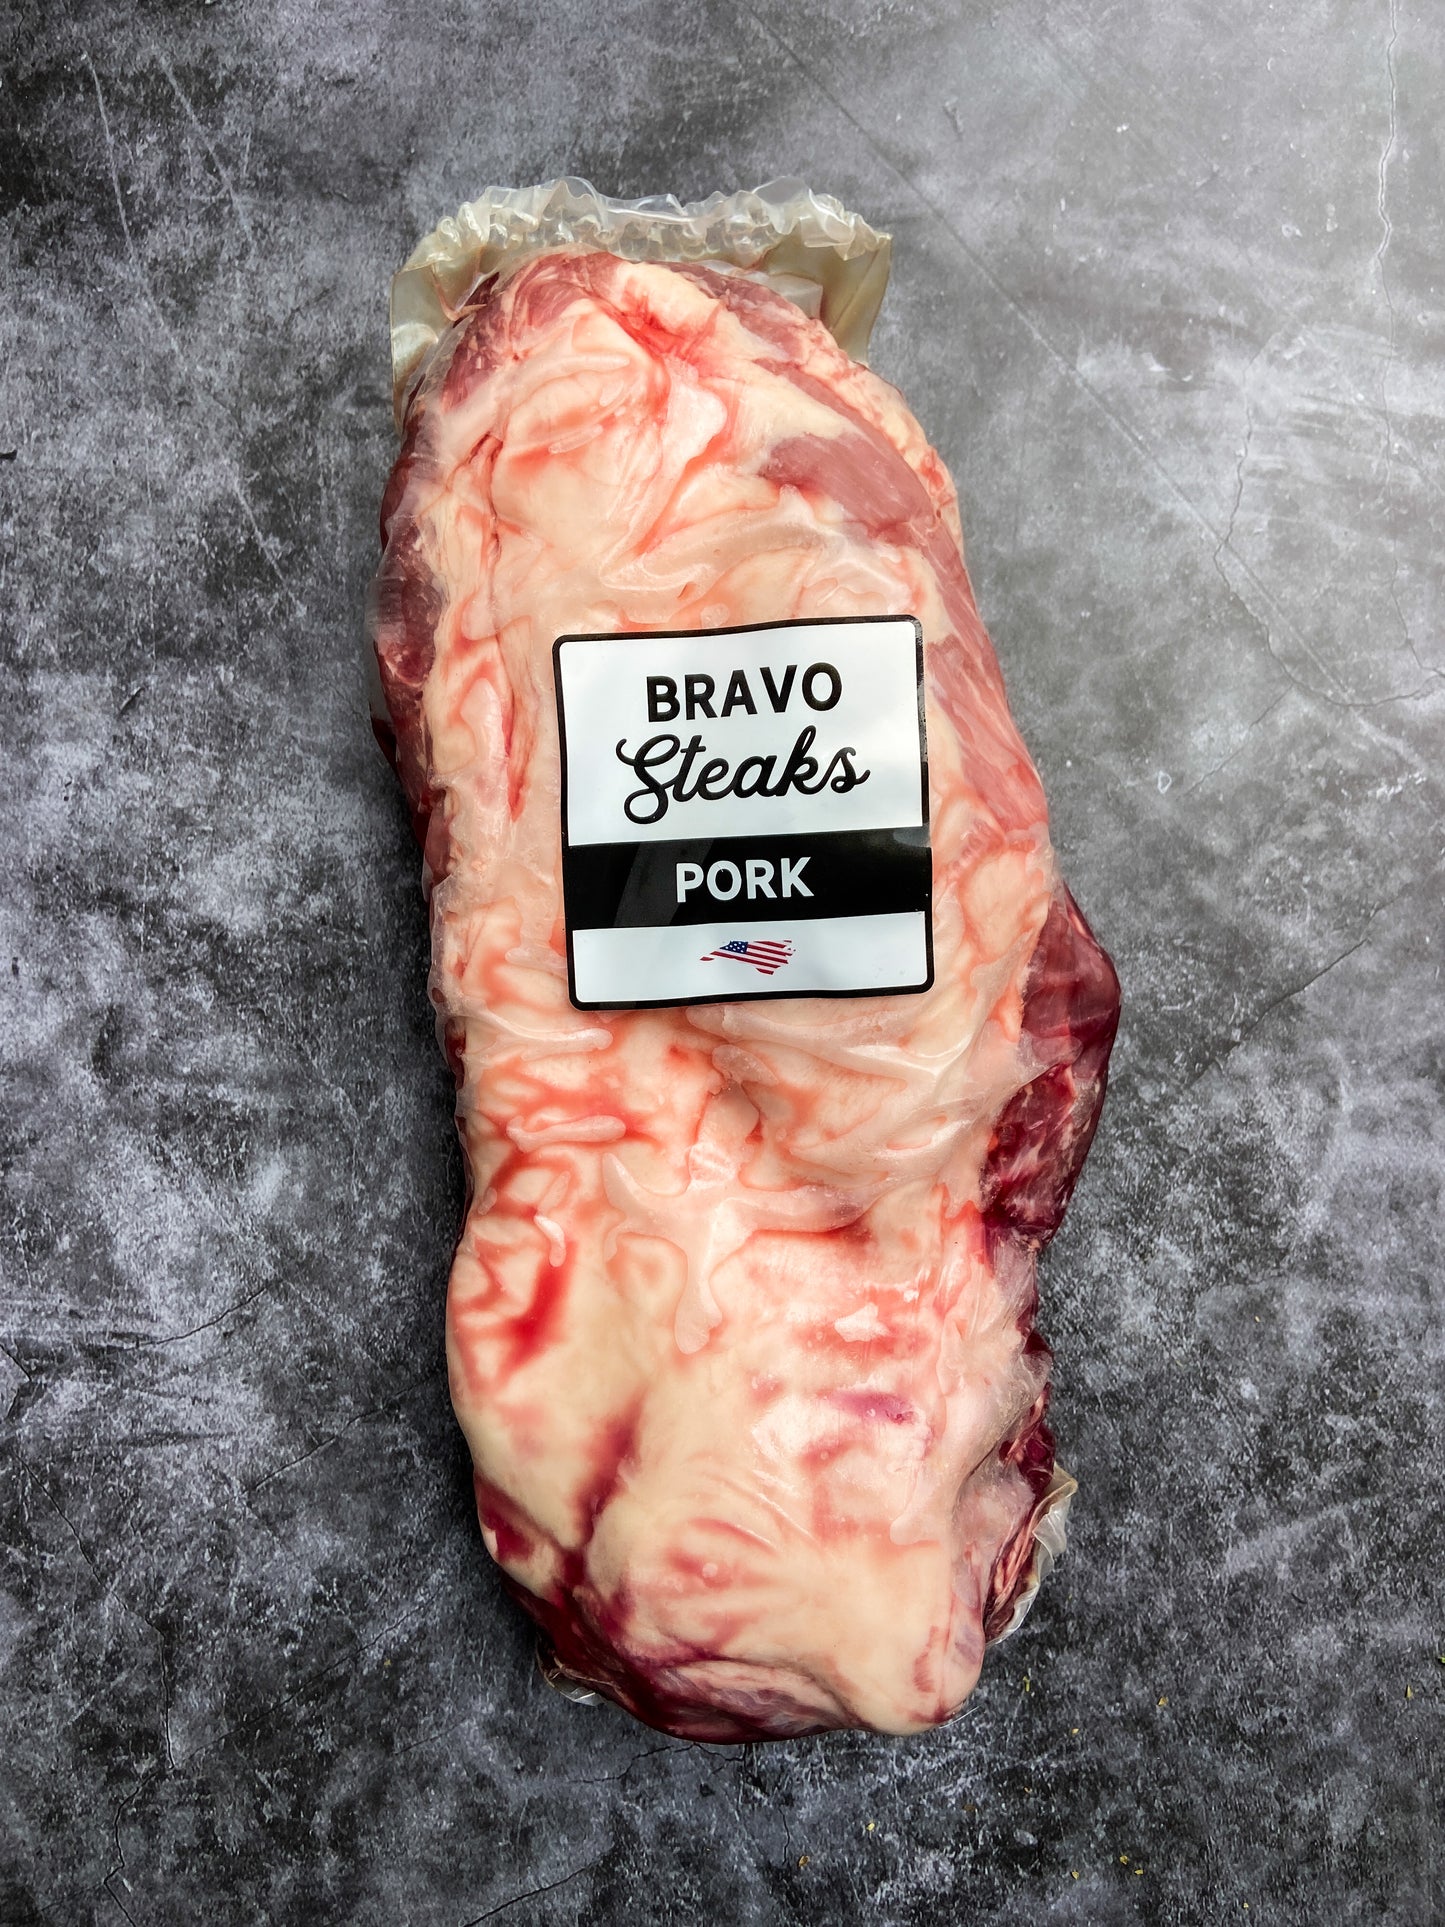 Boston Butt Pork Roast